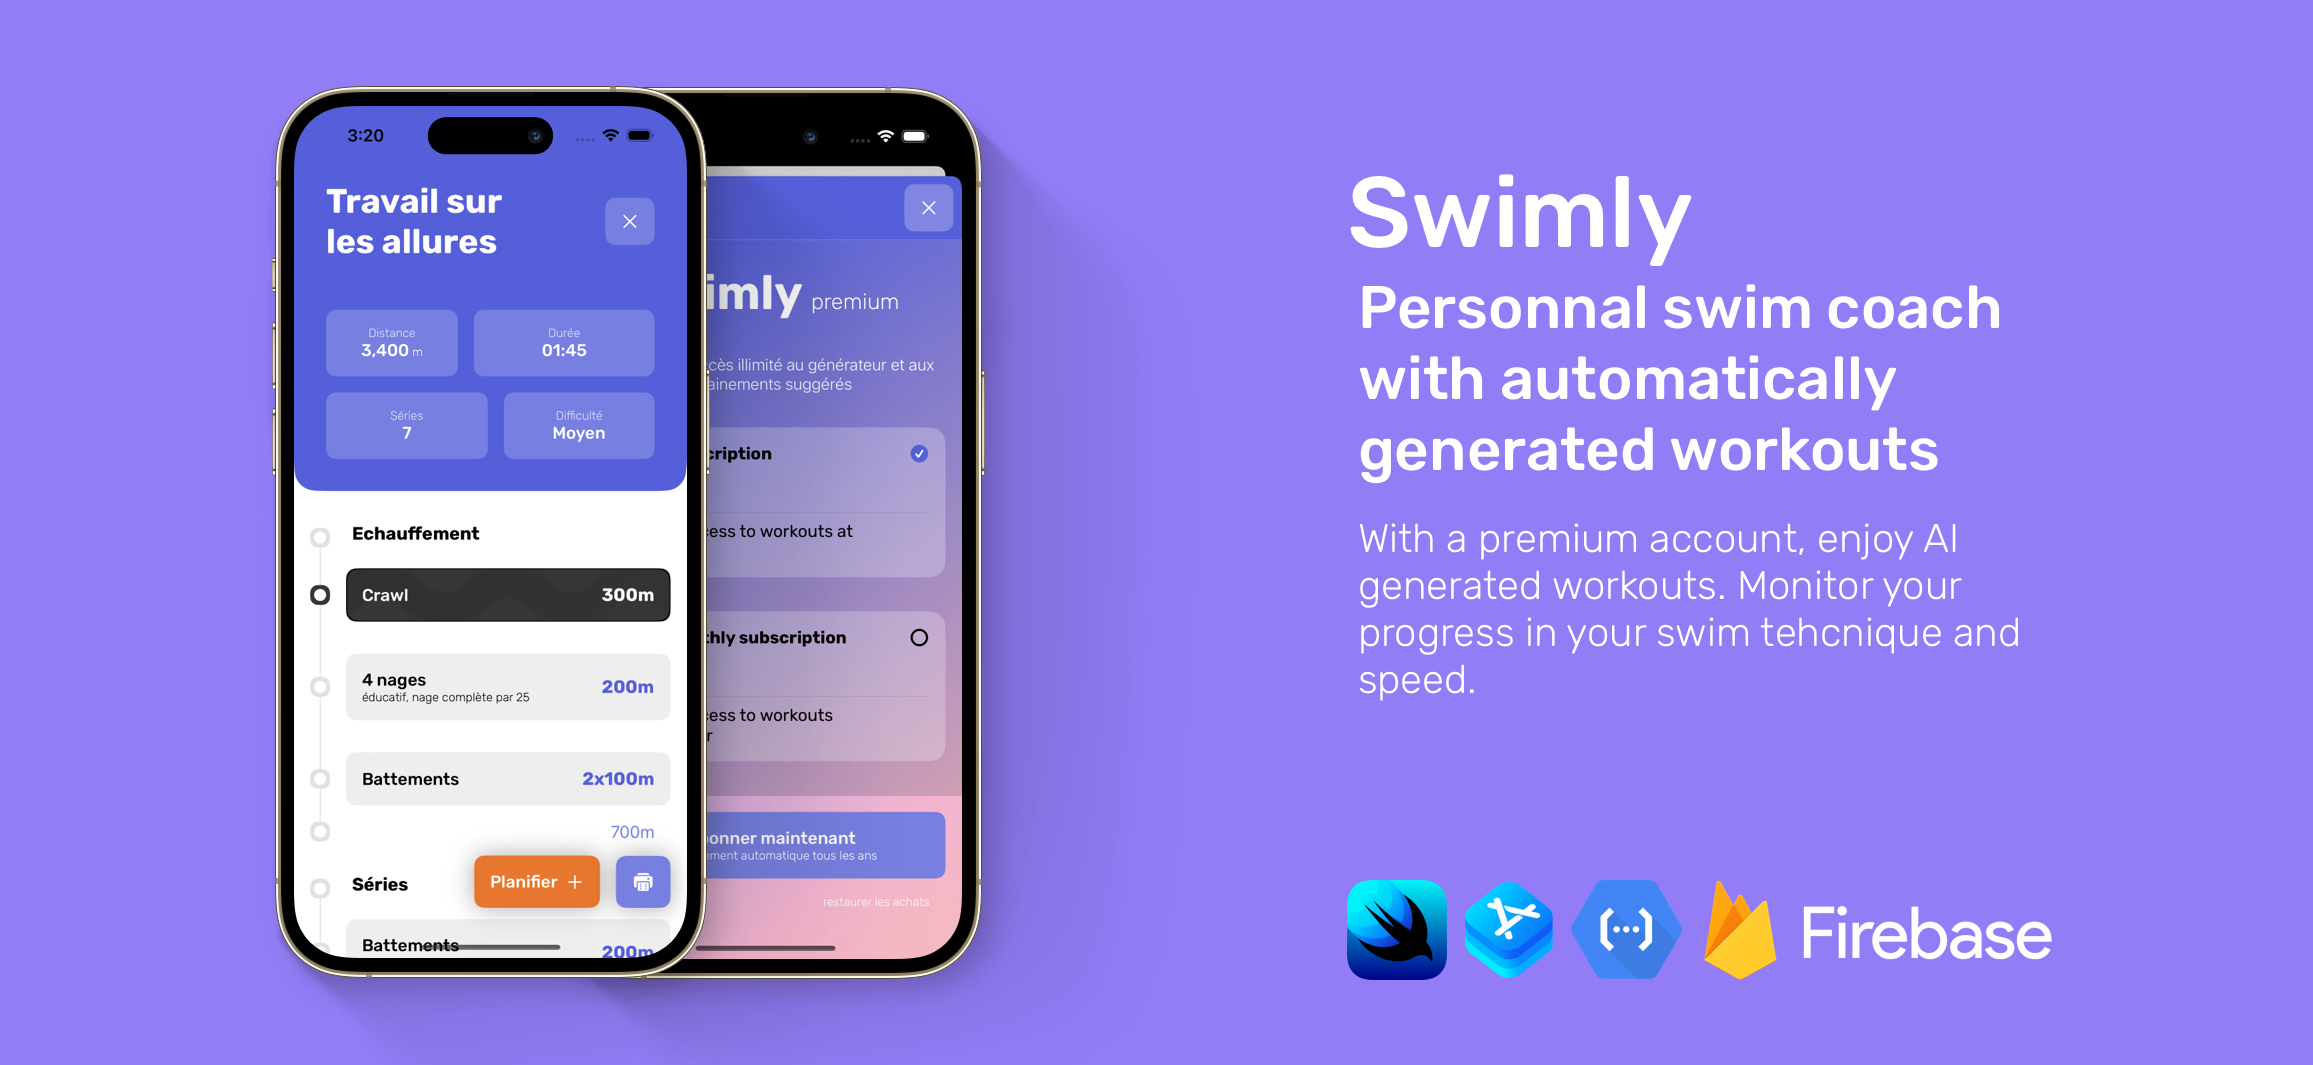 swimly app showcase